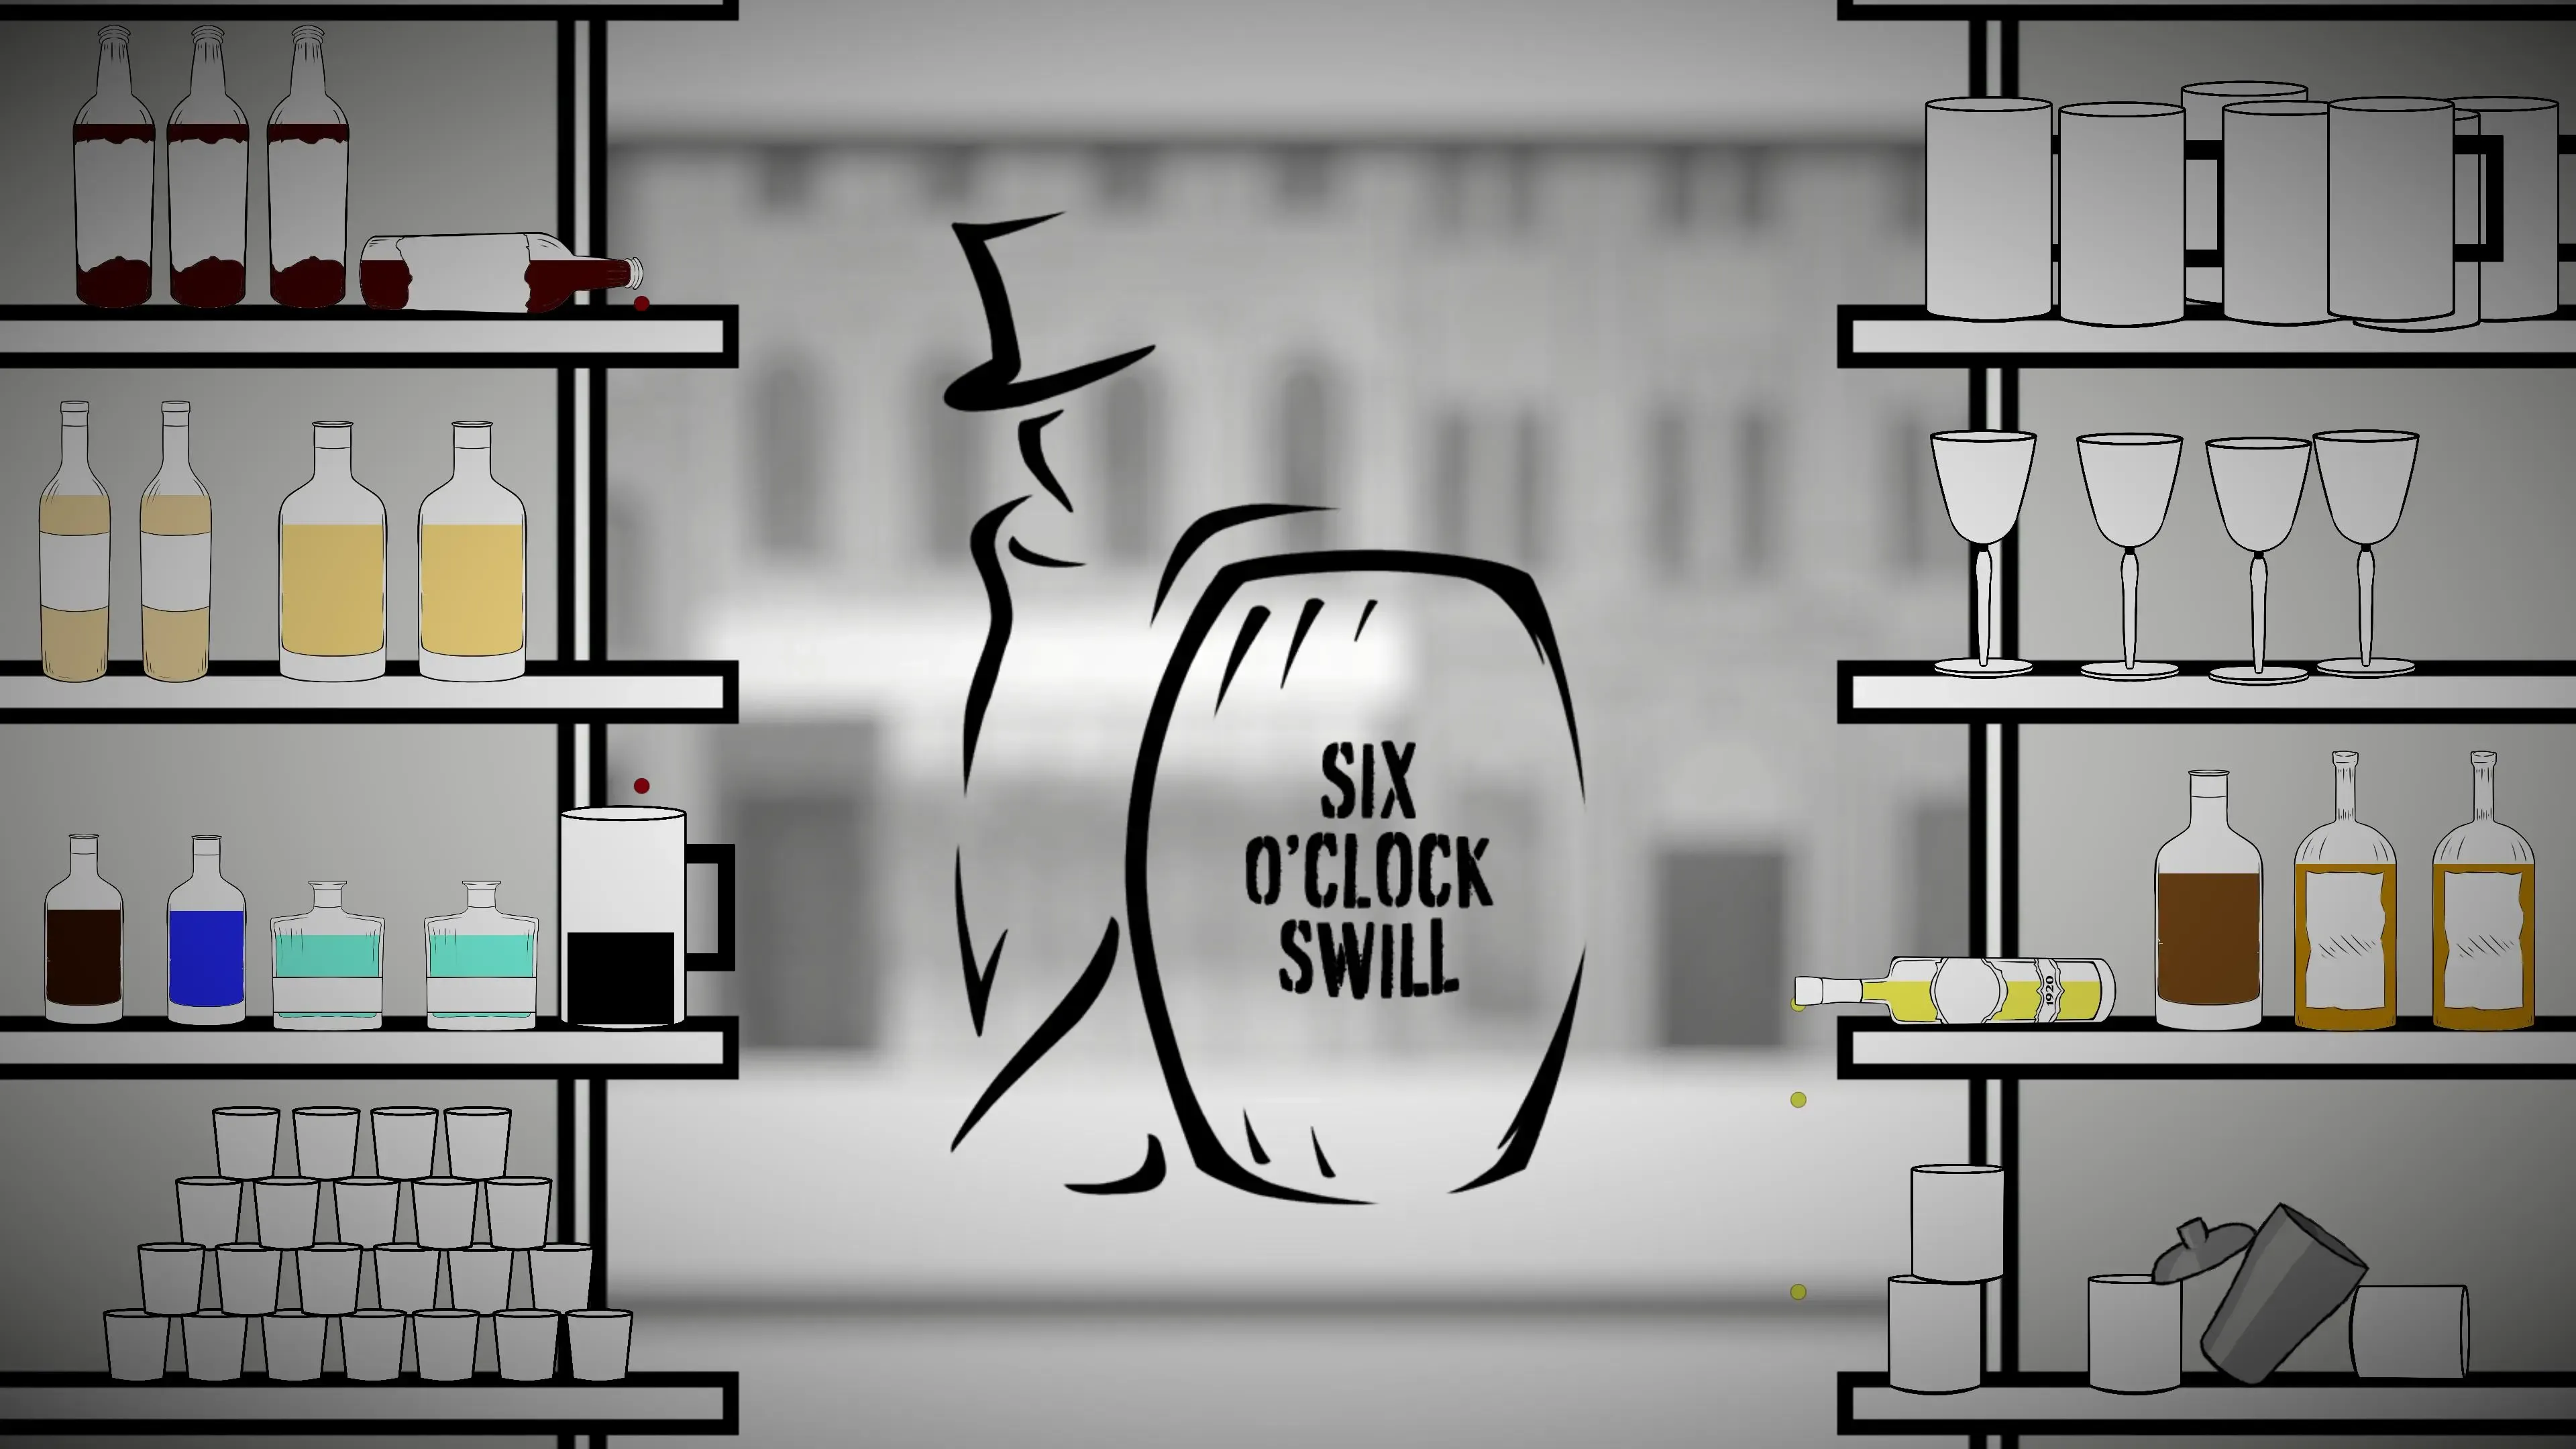 The Six O'clock Swill logo